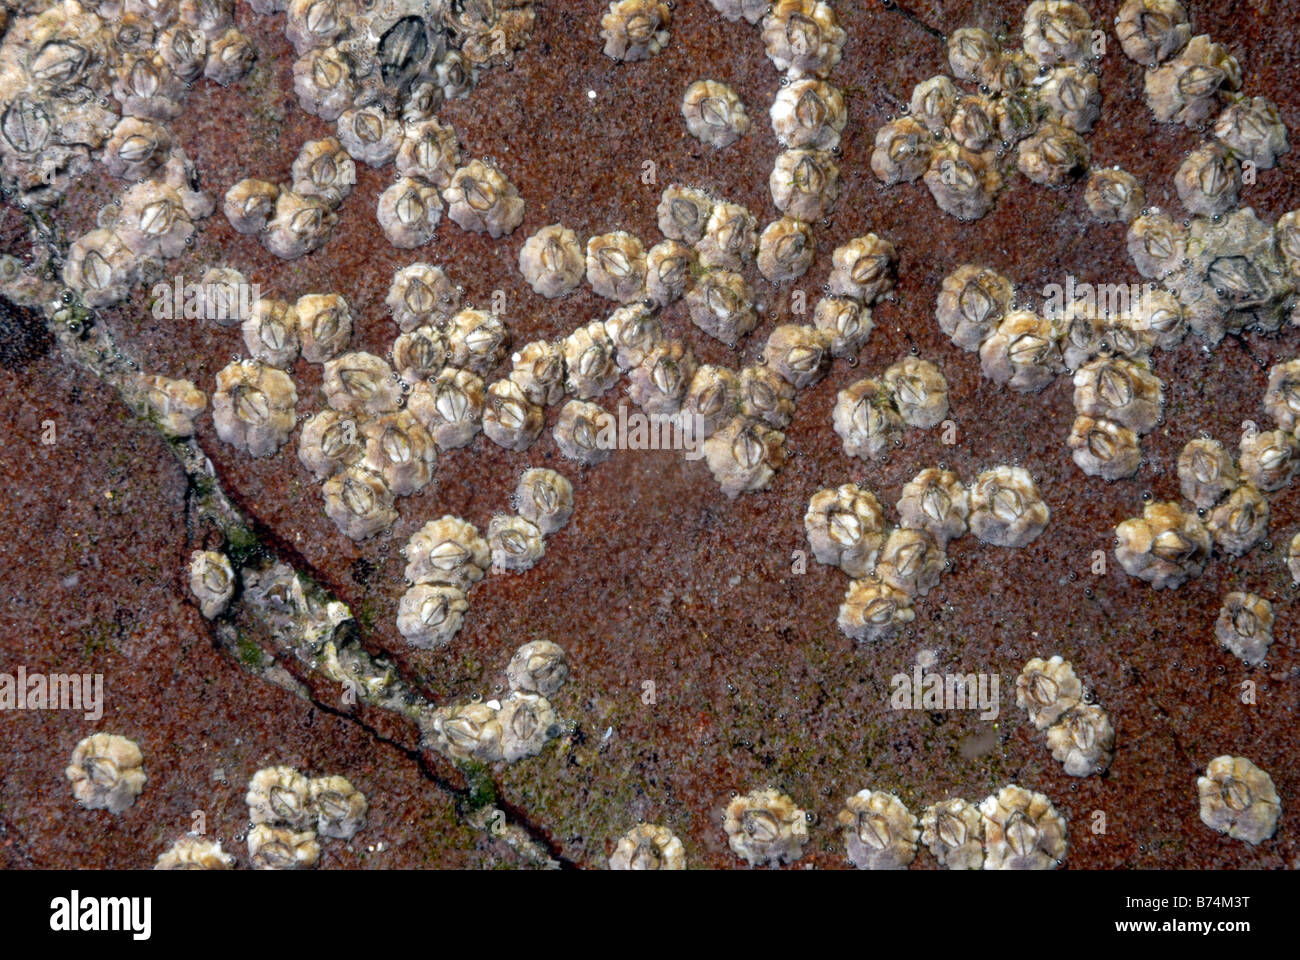 Acorn barnacle Semibalanus balanoides adults cemented to intertidal rock Wales UK Europe Stock Photo